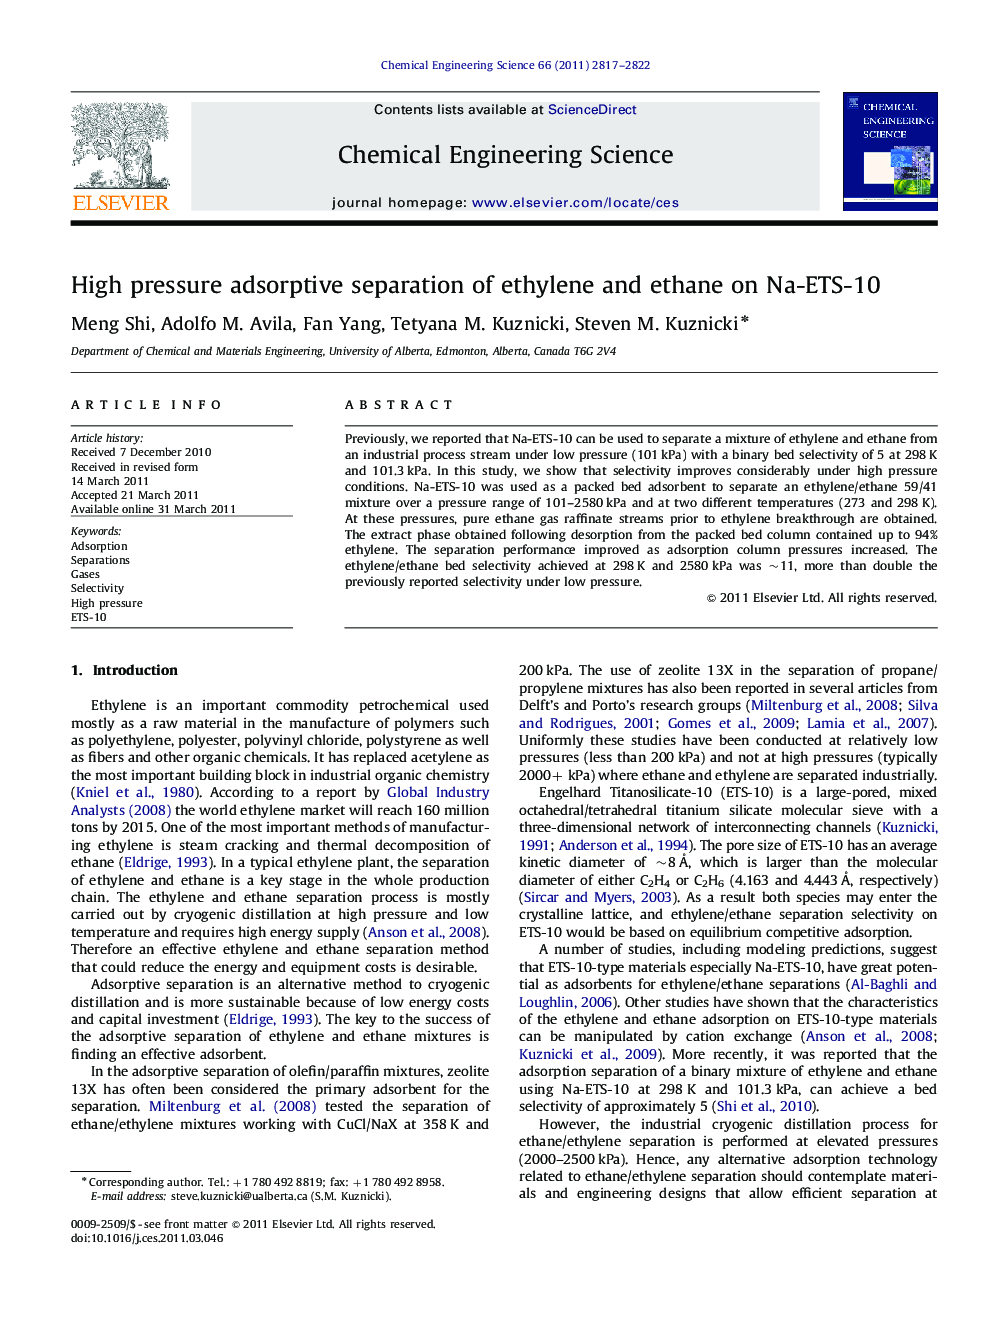 High pressure adsorptive separation of ethylene and ethane on Na-ETS-10